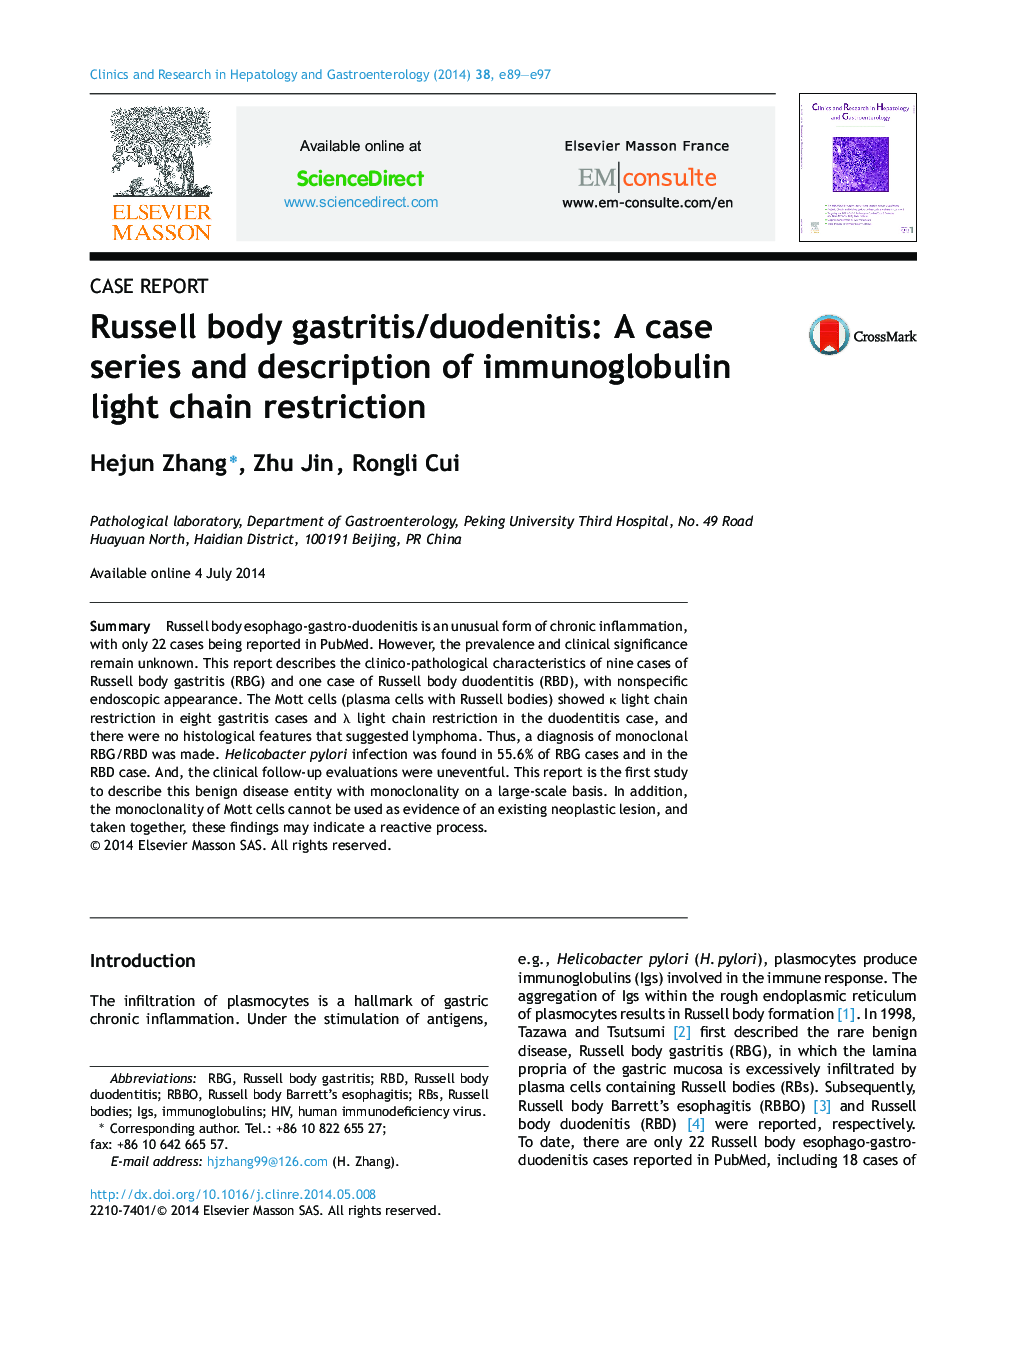 Russell body gastritis/duodenitis: A case series and description of immunoglobulin light chain restriction